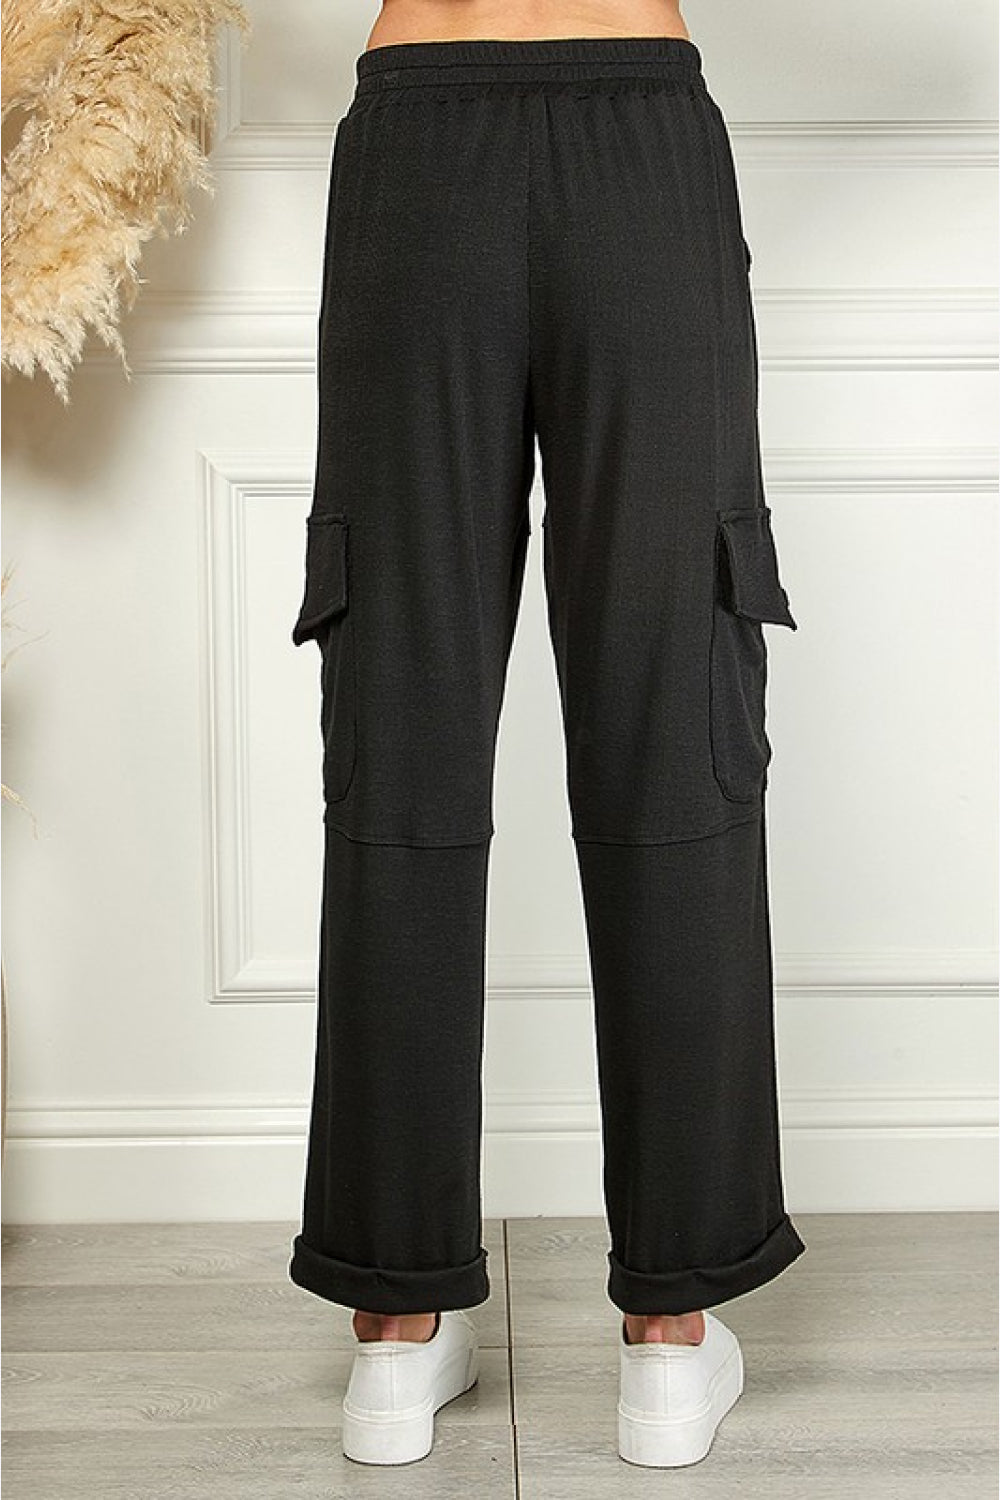 Blumin Apparel Full Size Elastic Waist Cuffed Cargo Pants | Pants - CHANELIA